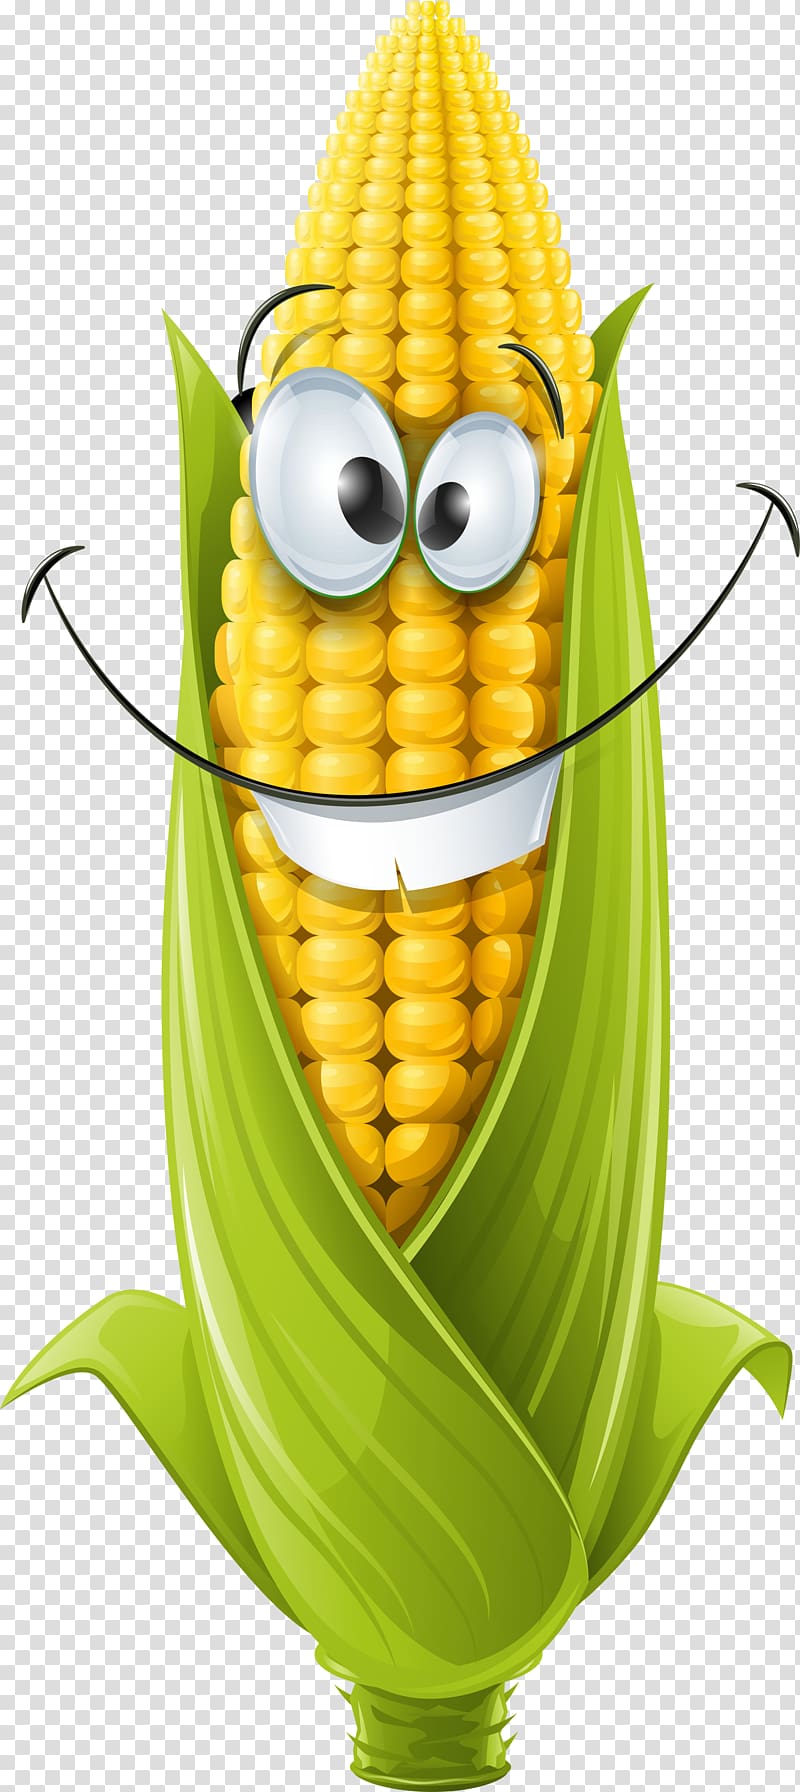 Corn on the cob Maize, corn transparent background PNG clipart